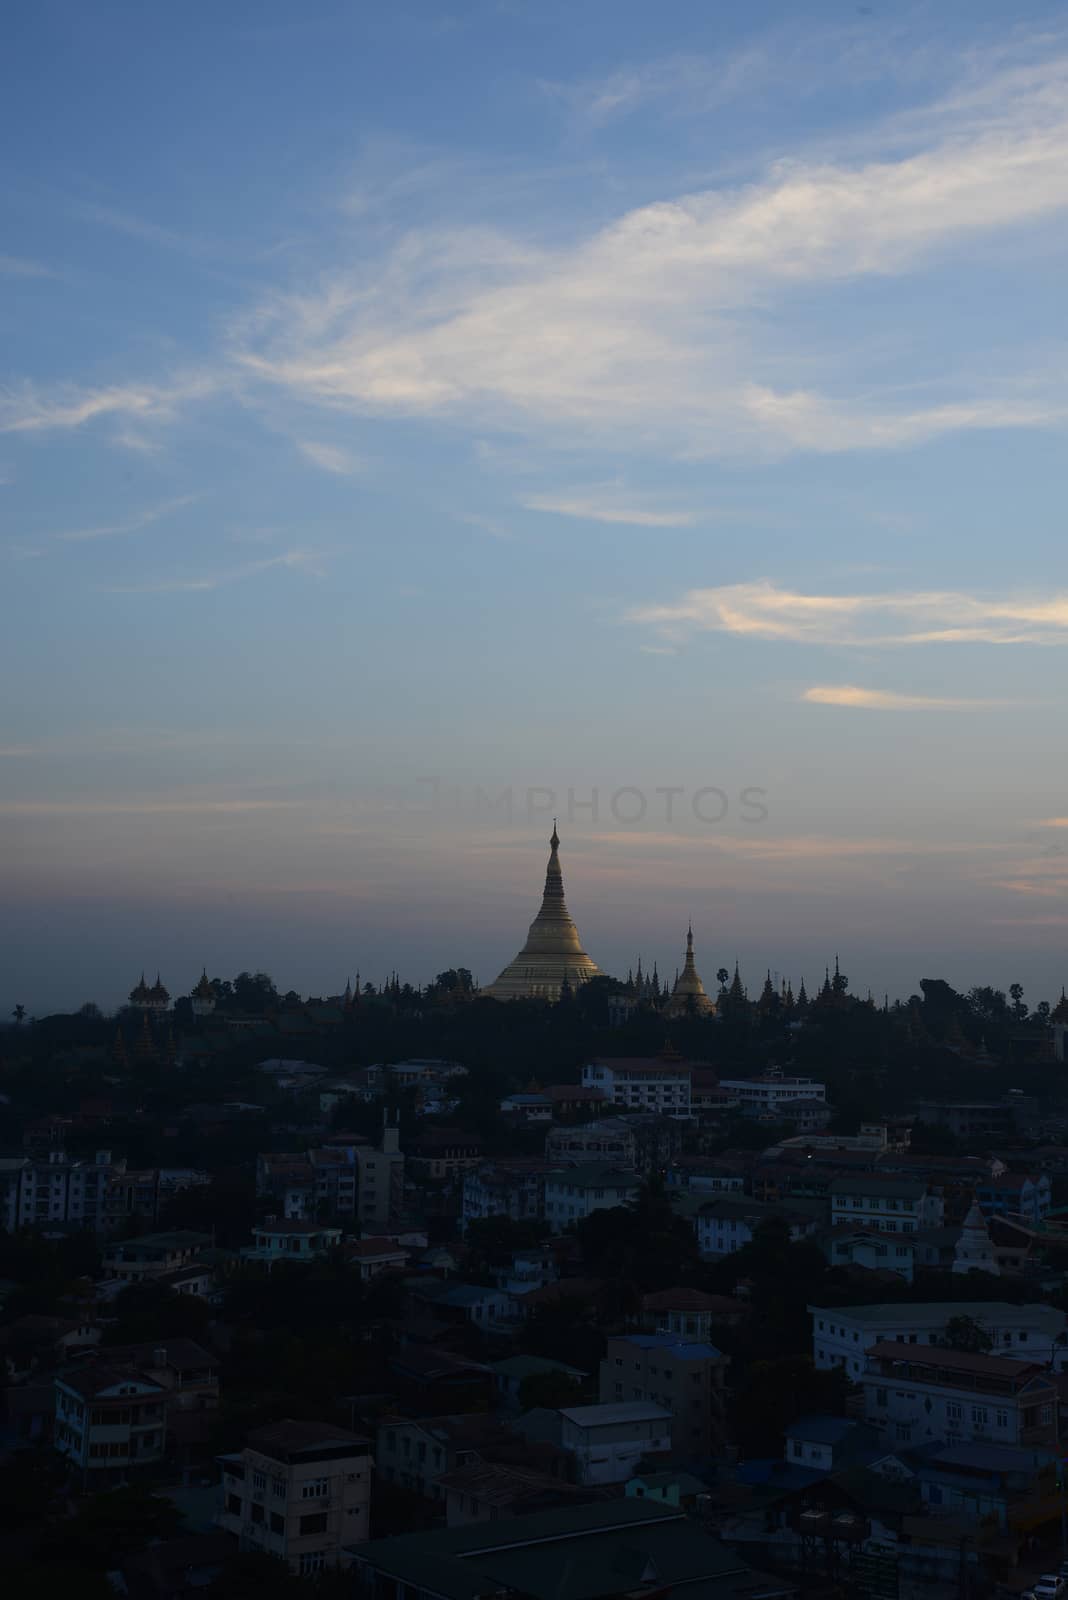 shwedagon pagoda surrounded by houses in yangon